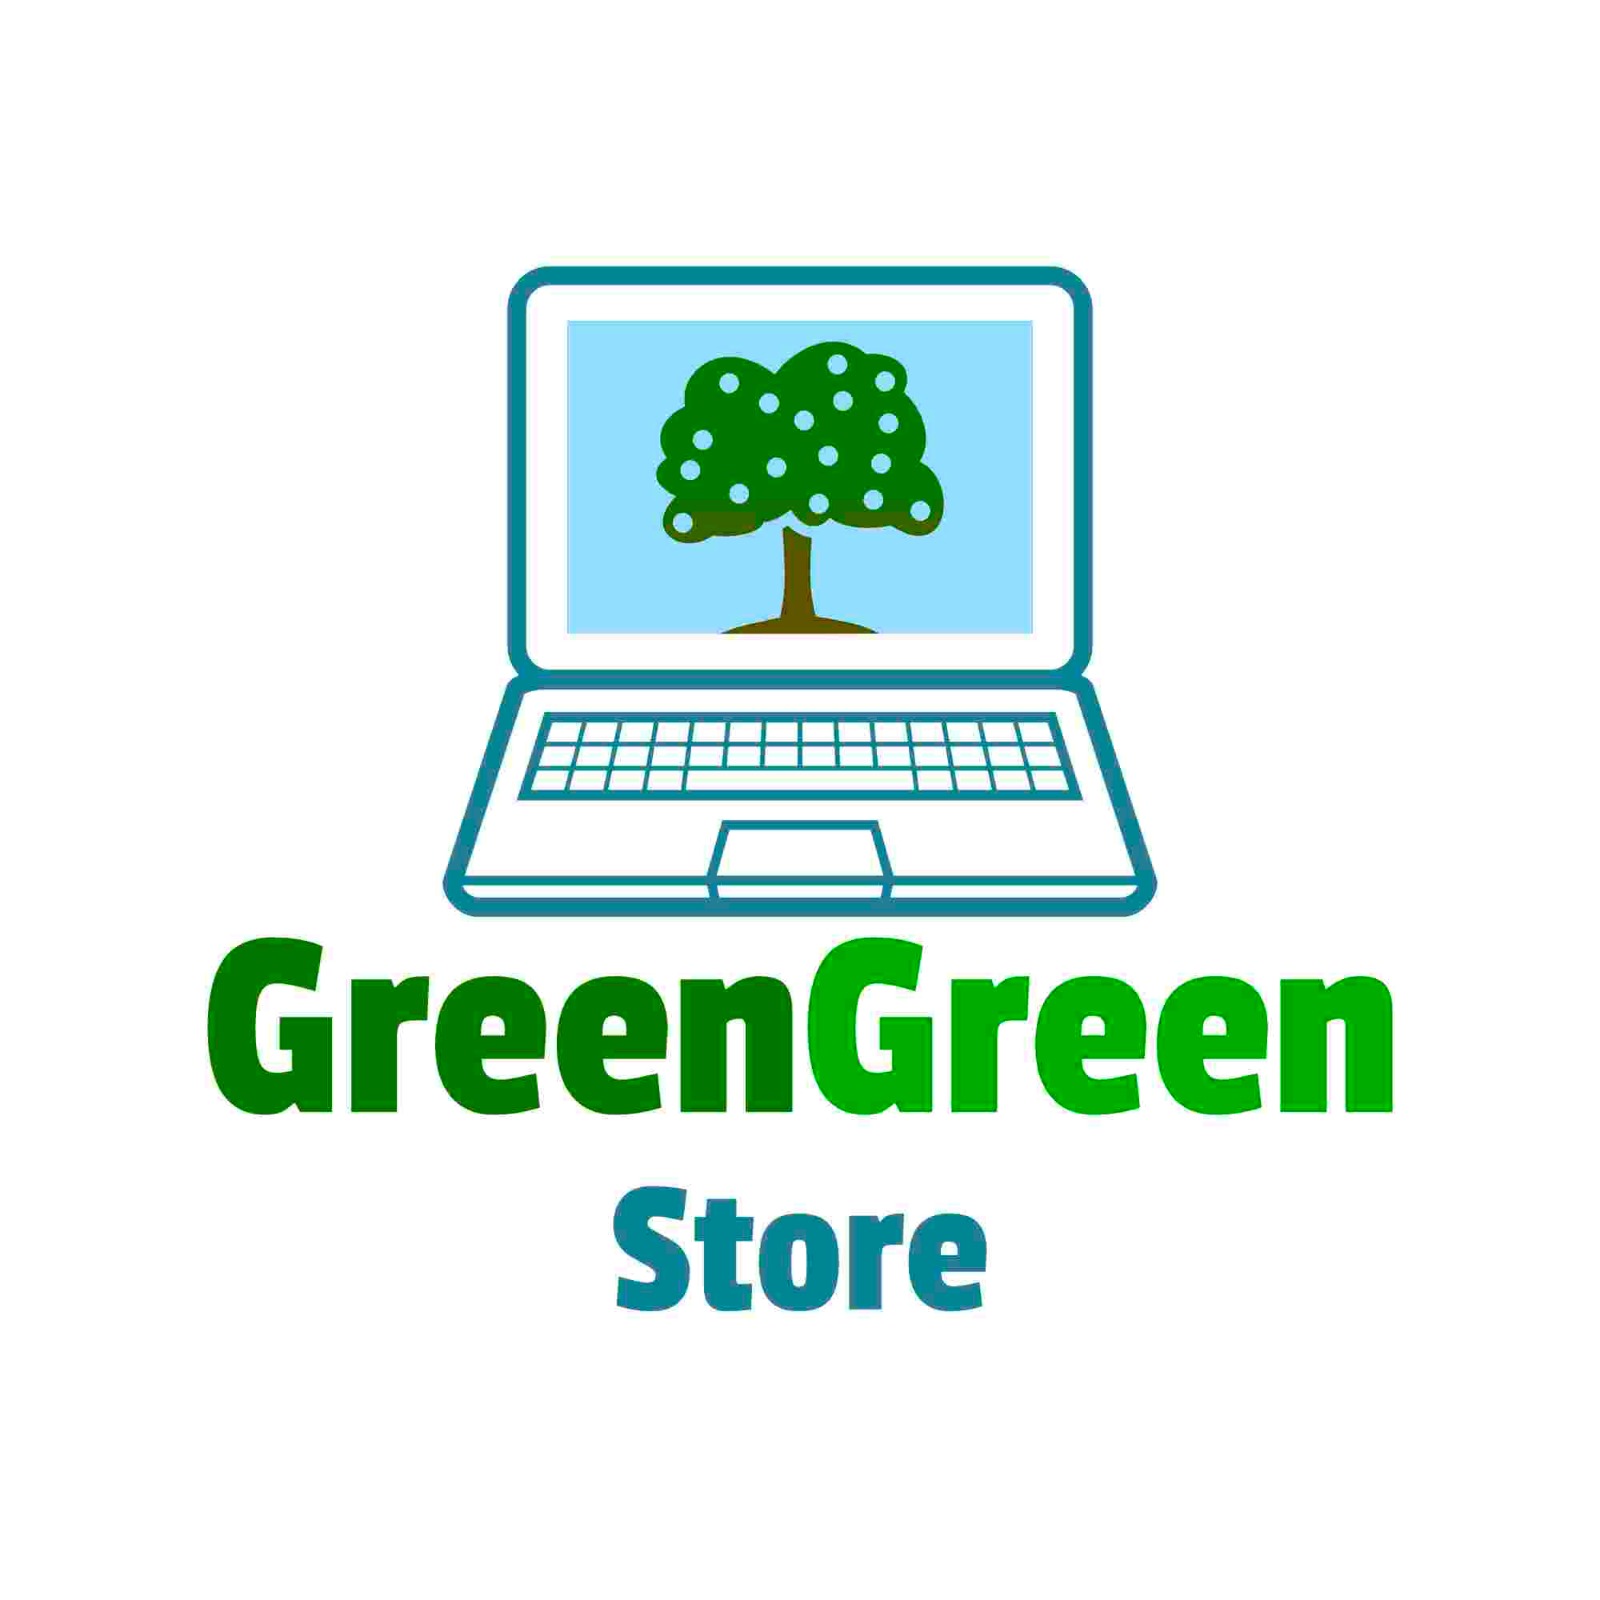 SMT Commerce Ltd (Trading as GreenGreenStore)